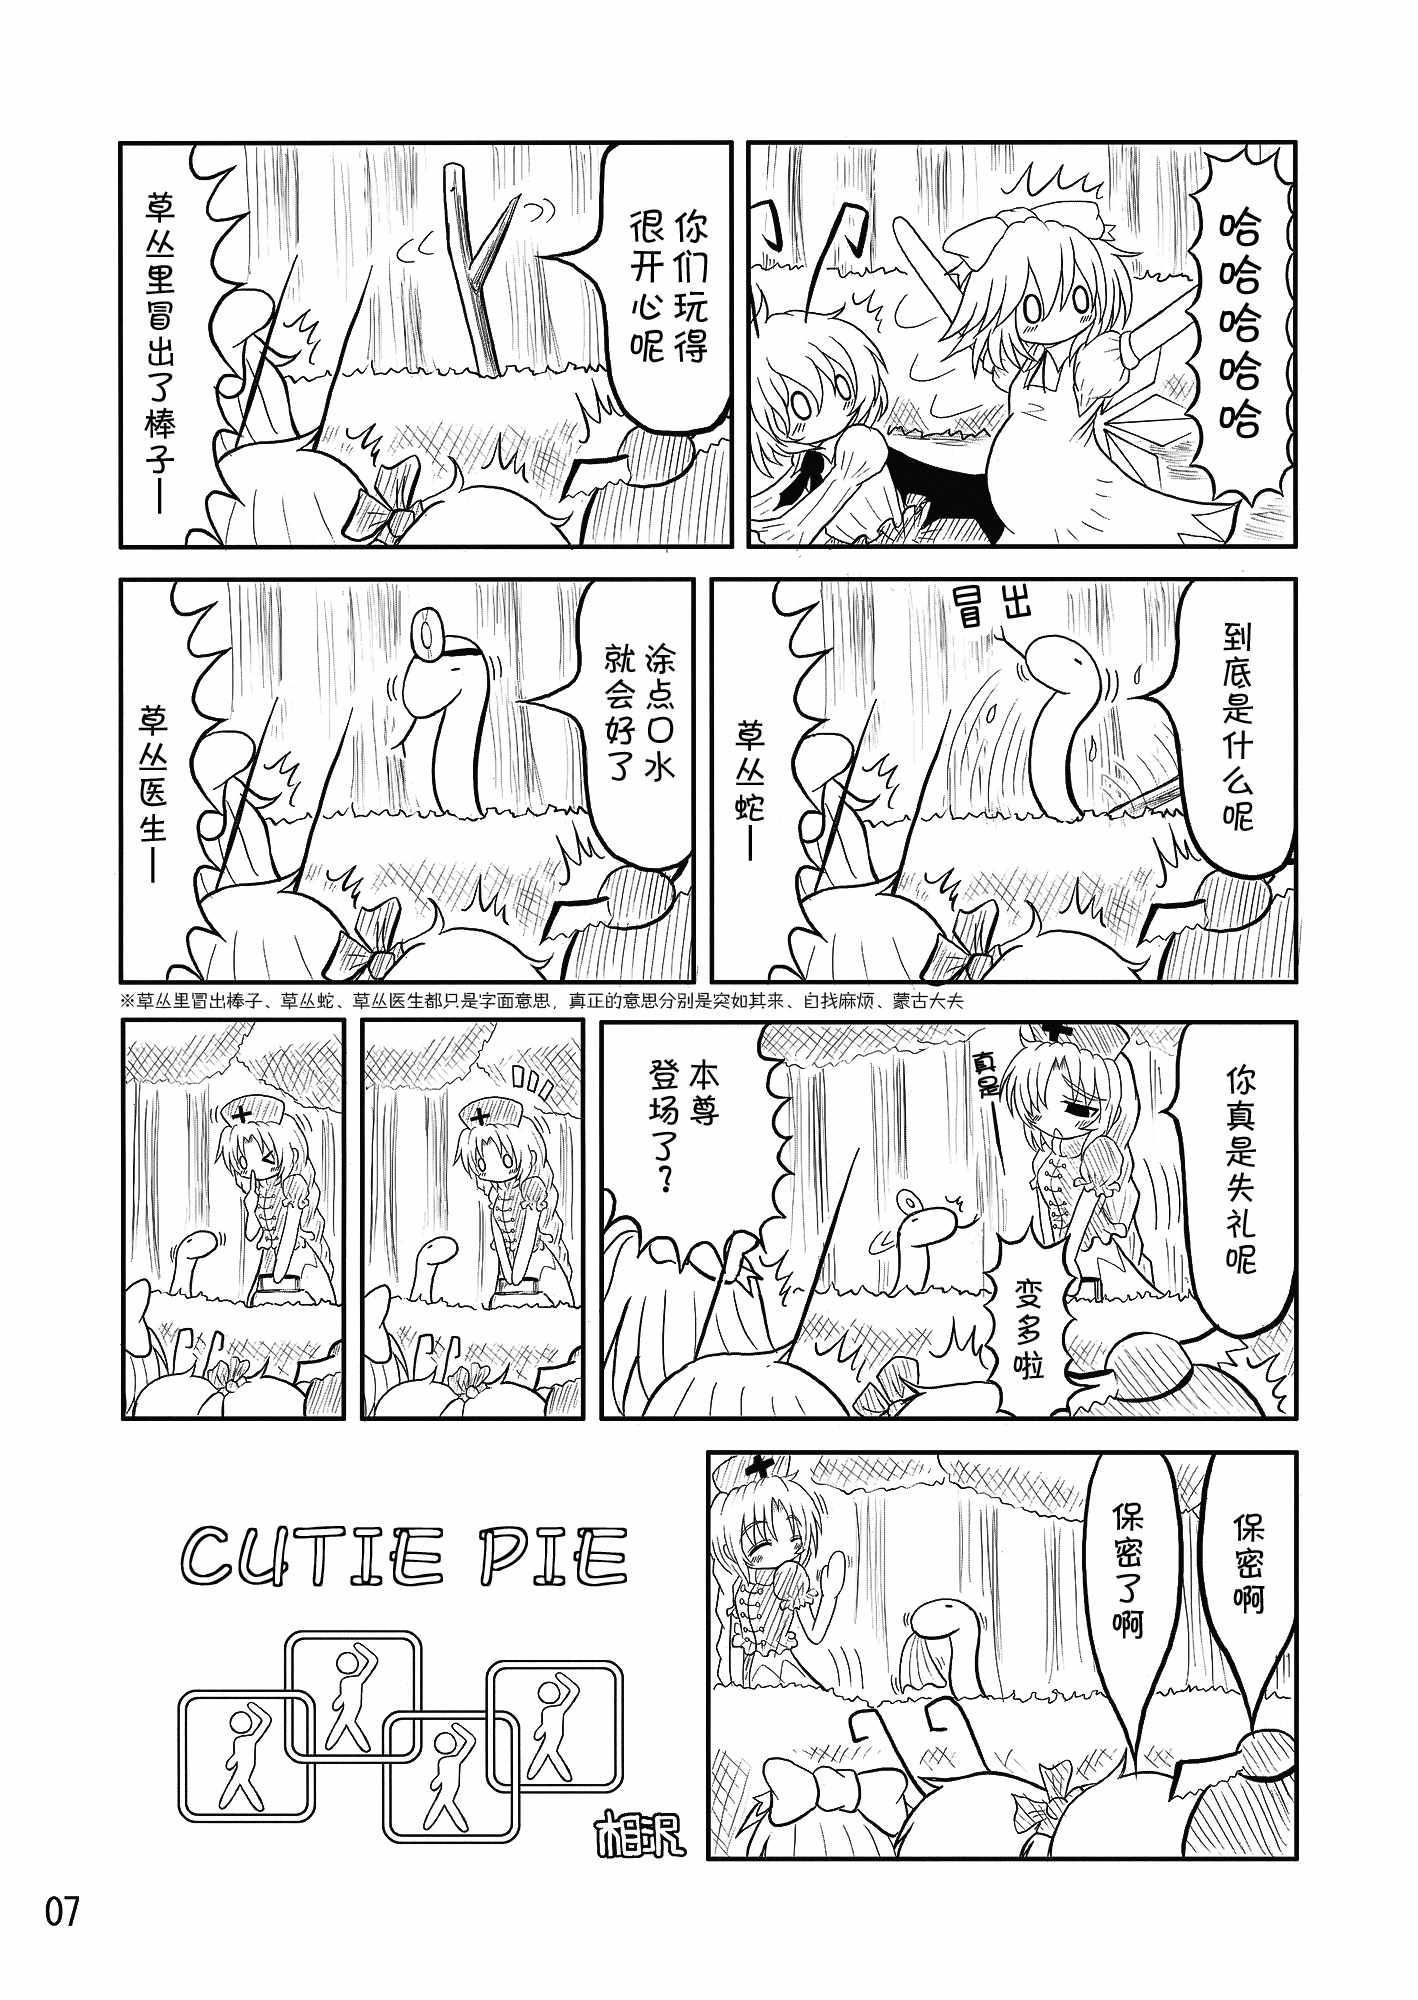 《cutie pie》漫画 短篇